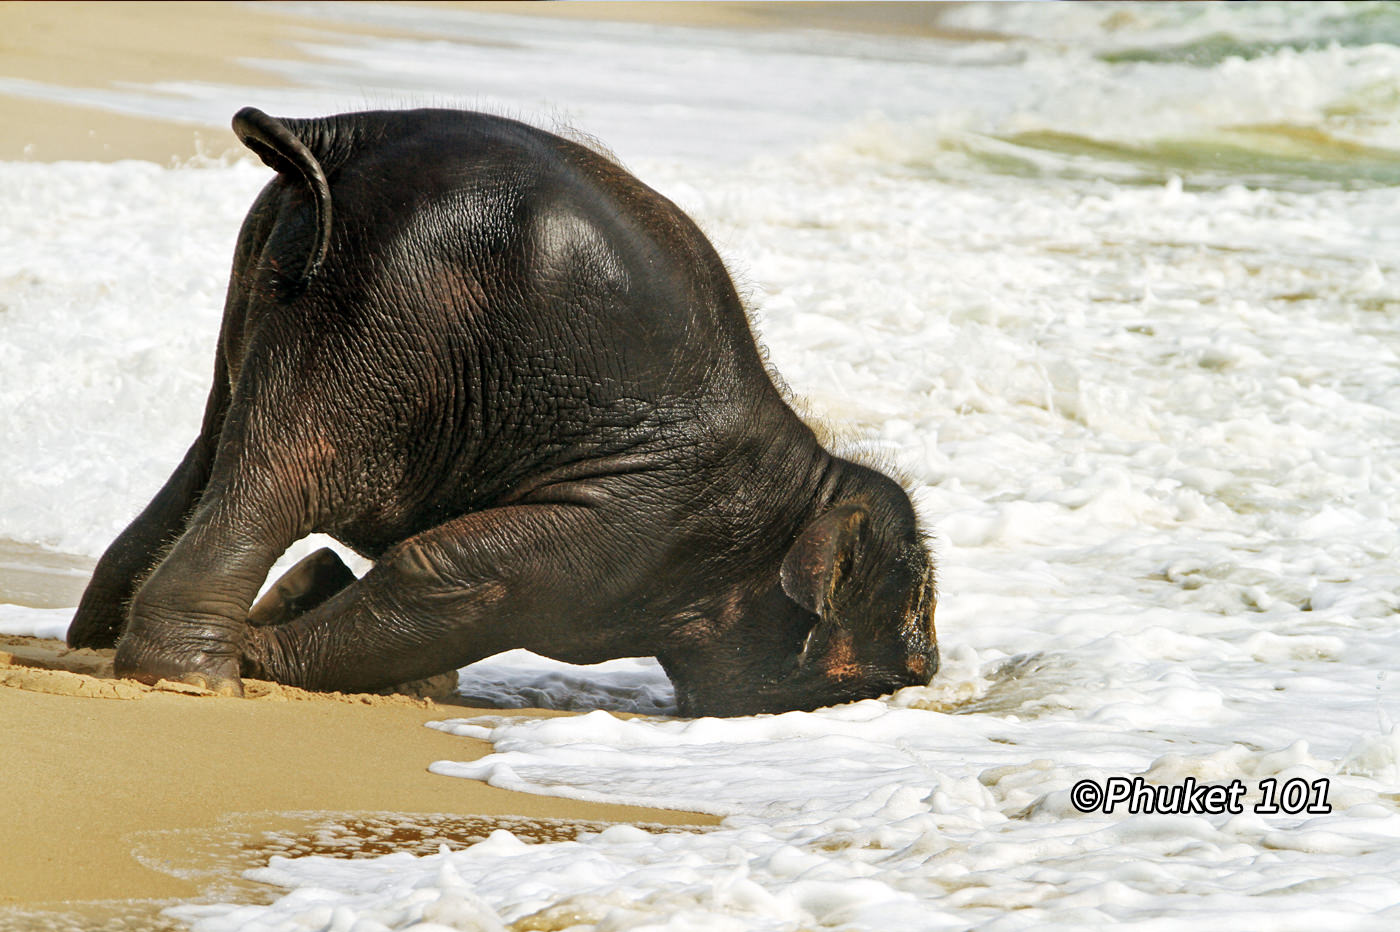 Baby Elephant On A Phuket Beach The Real Story Behind The Photos By Phuket 101